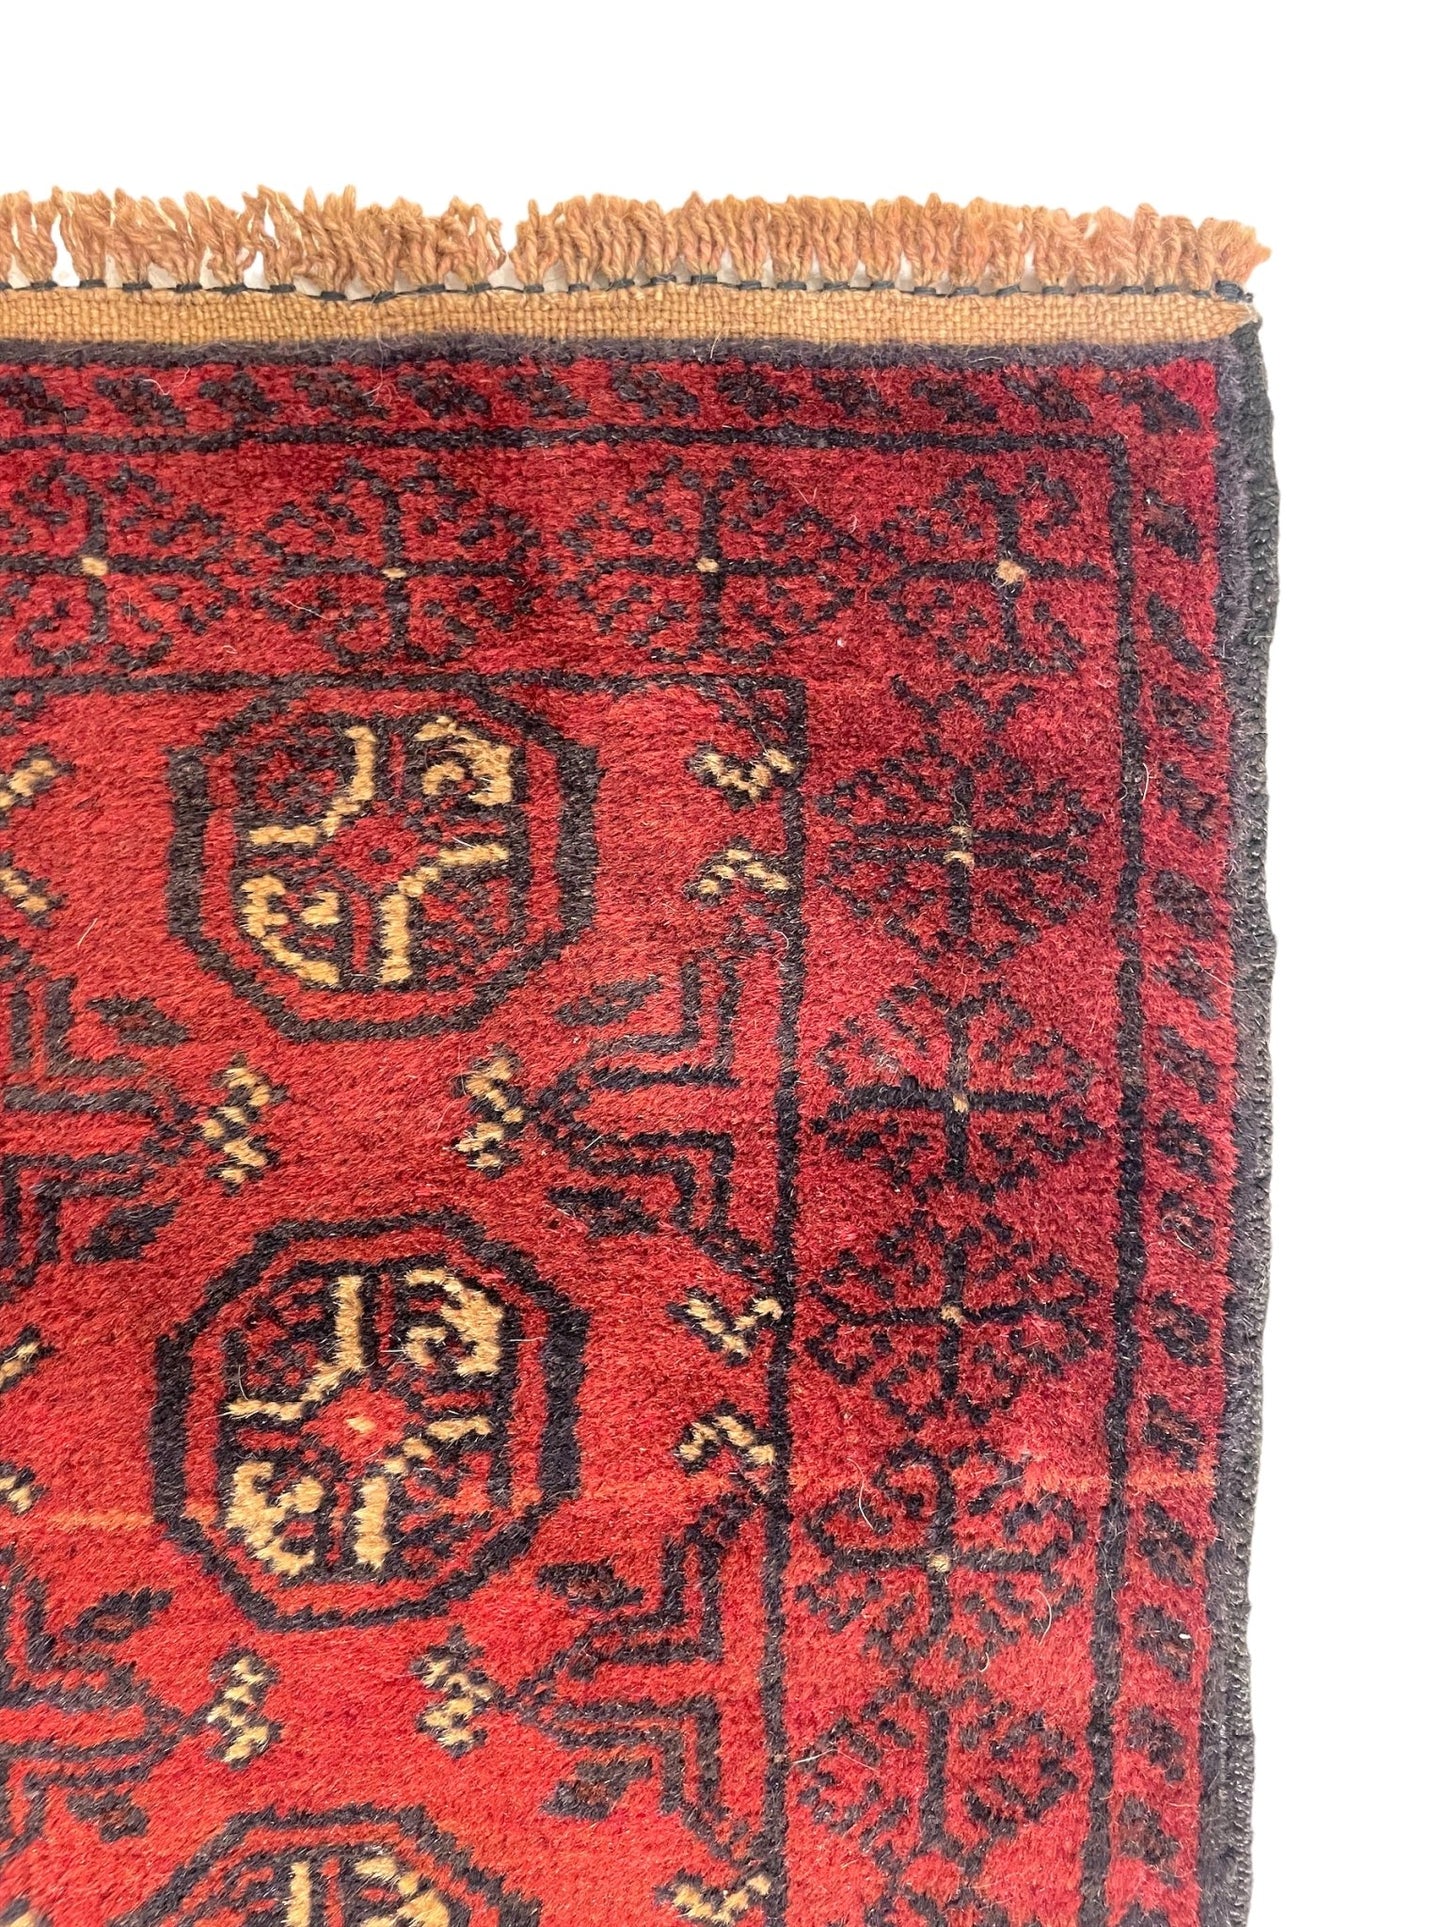 KASHF 100% Wool Prayer Rug by Asrār Collection 2'9" x 4'5"